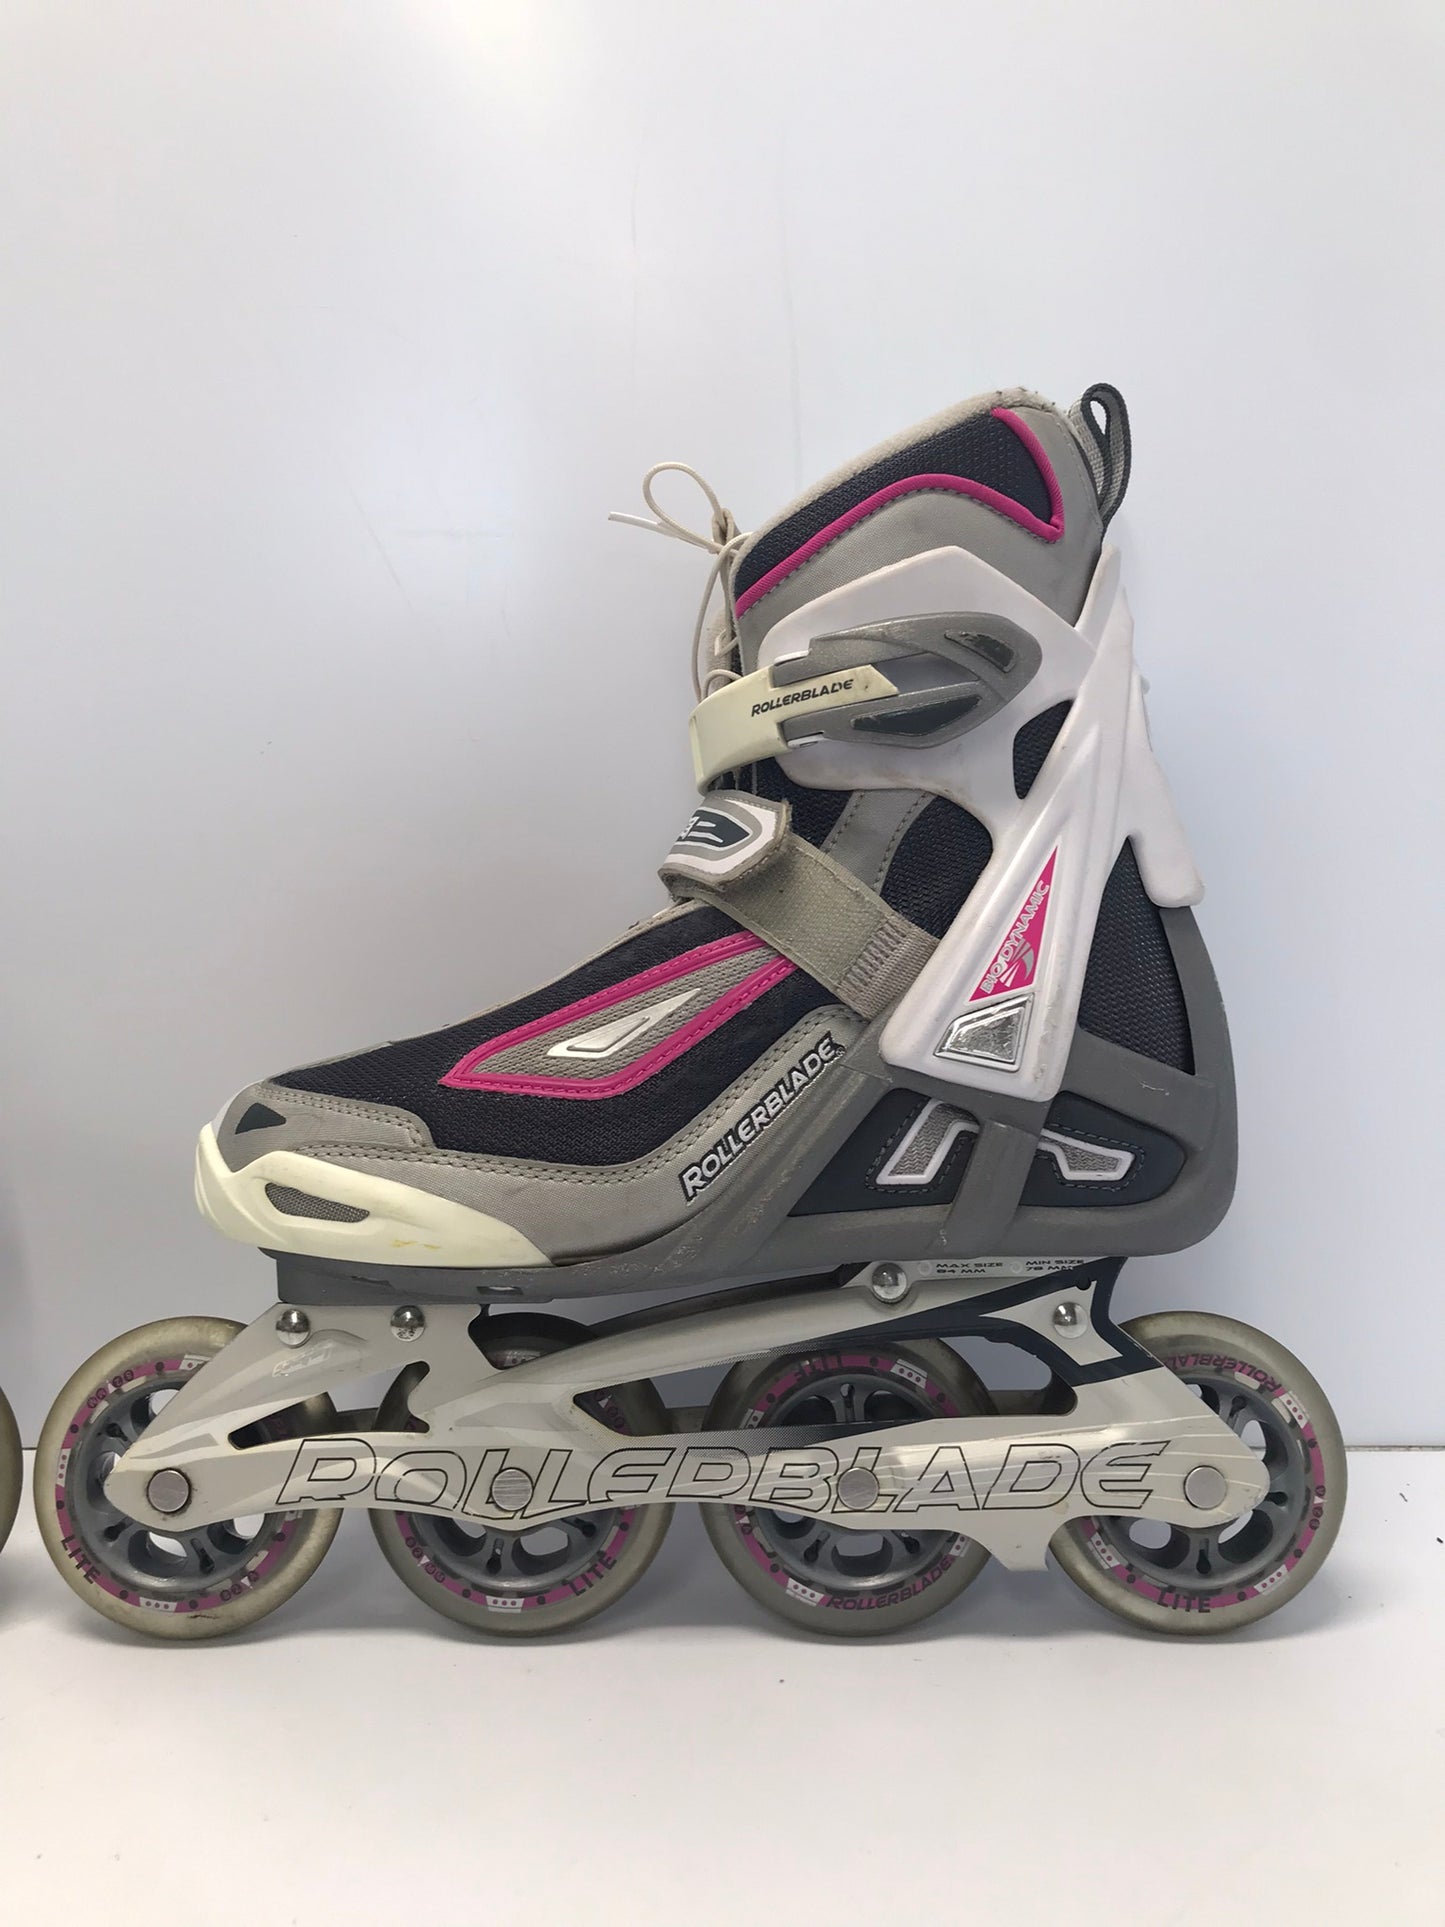 Inline Roller Skates Ladies Size 7 Rollerblades Grey Pink Rubber Wheels Excellent